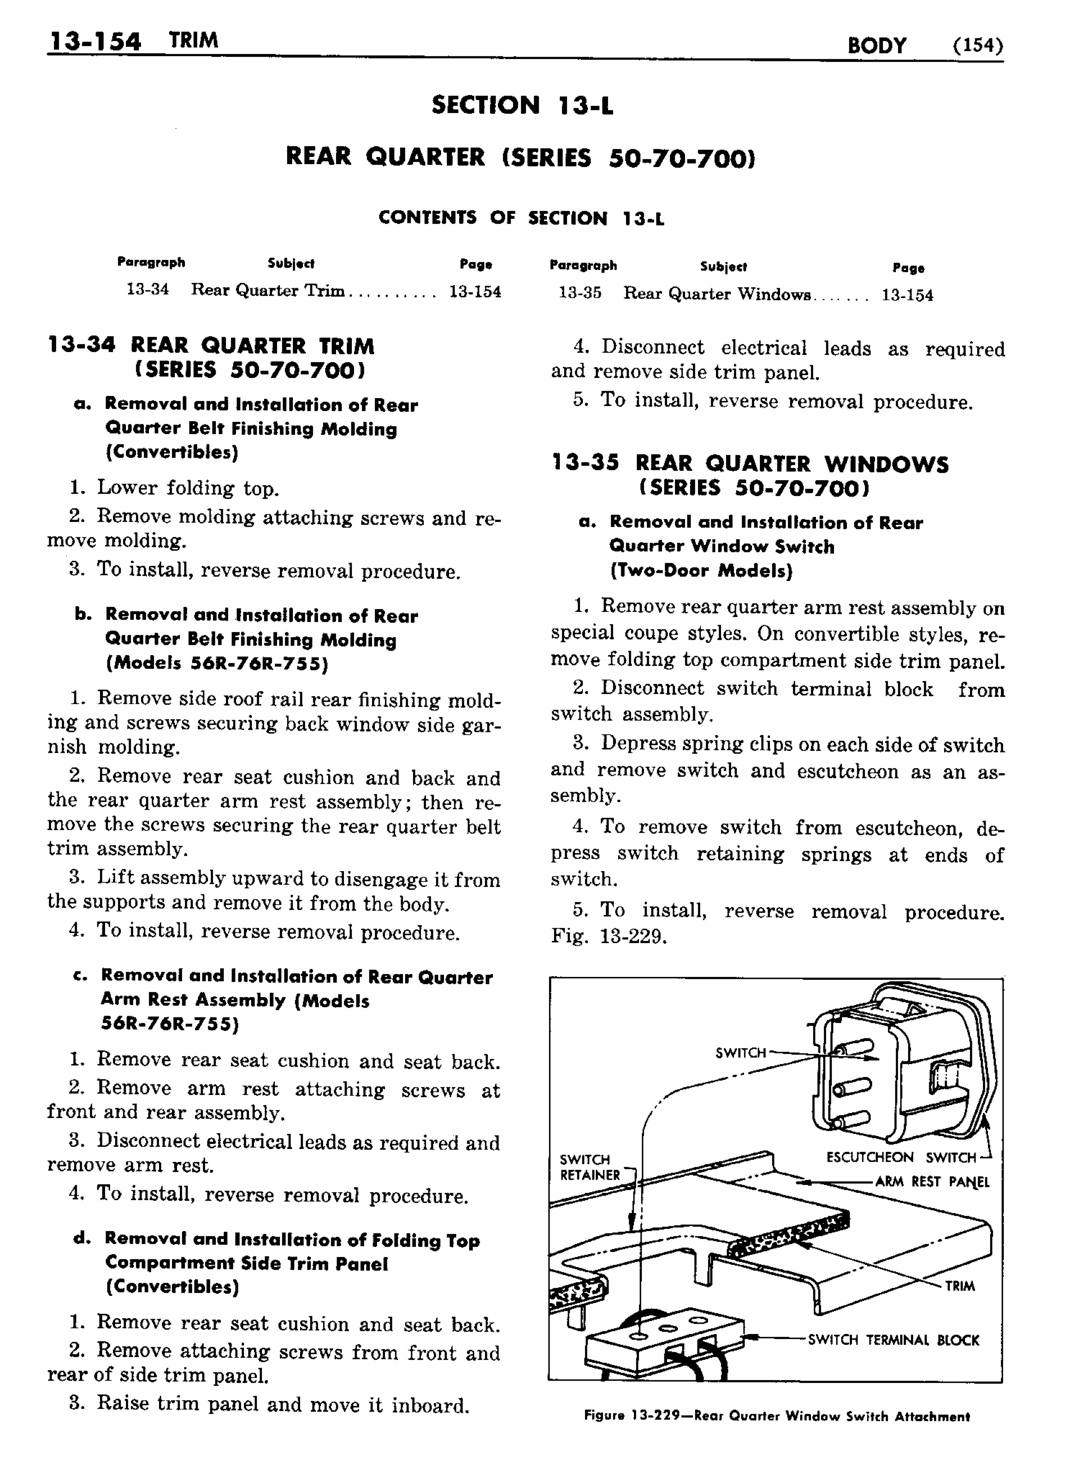 n_1958 Buick Body Service Manual-155-155.jpg